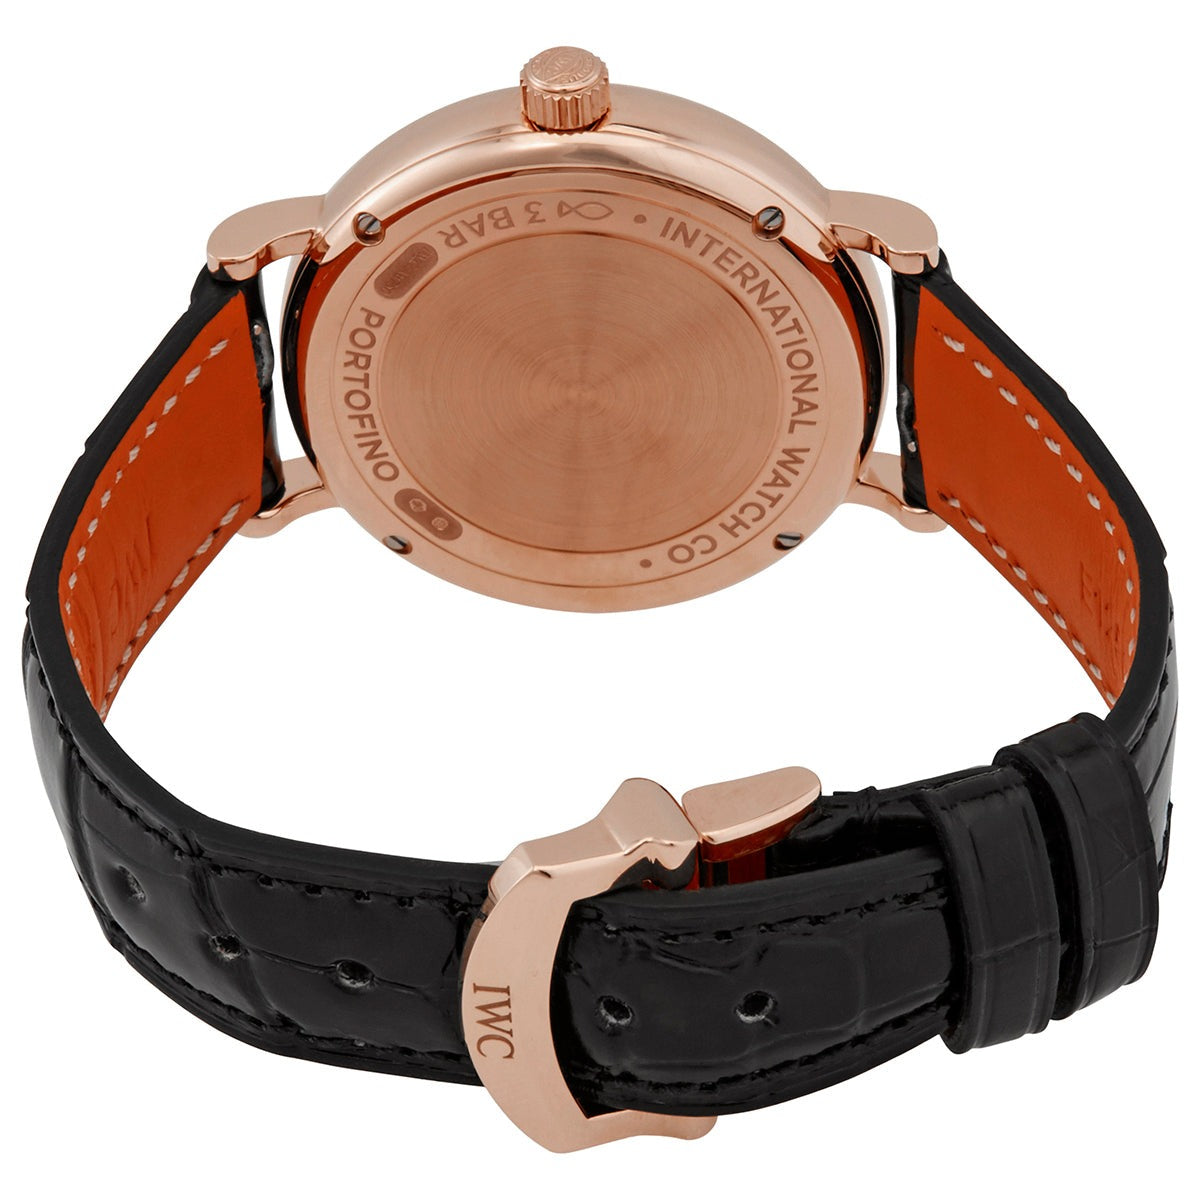 IWC Portofino Automatic Diamonds Silver Dial Black Leather Strap Watch for Women - IW357406